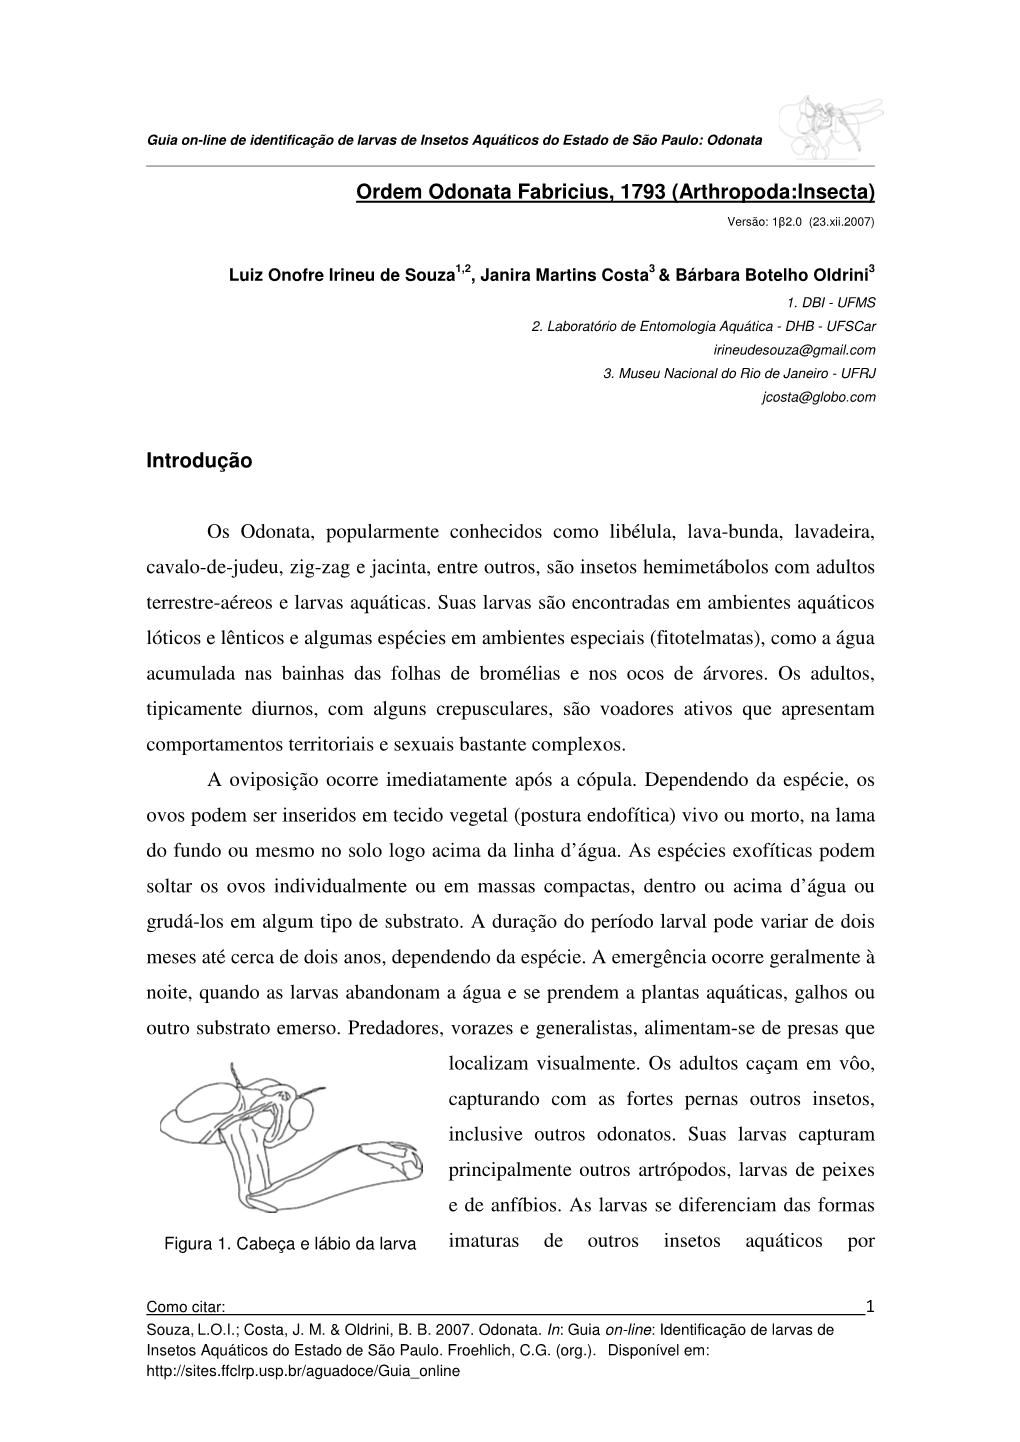 (2007). Odonata. In: Guia On-Line: Identificação De Larvas